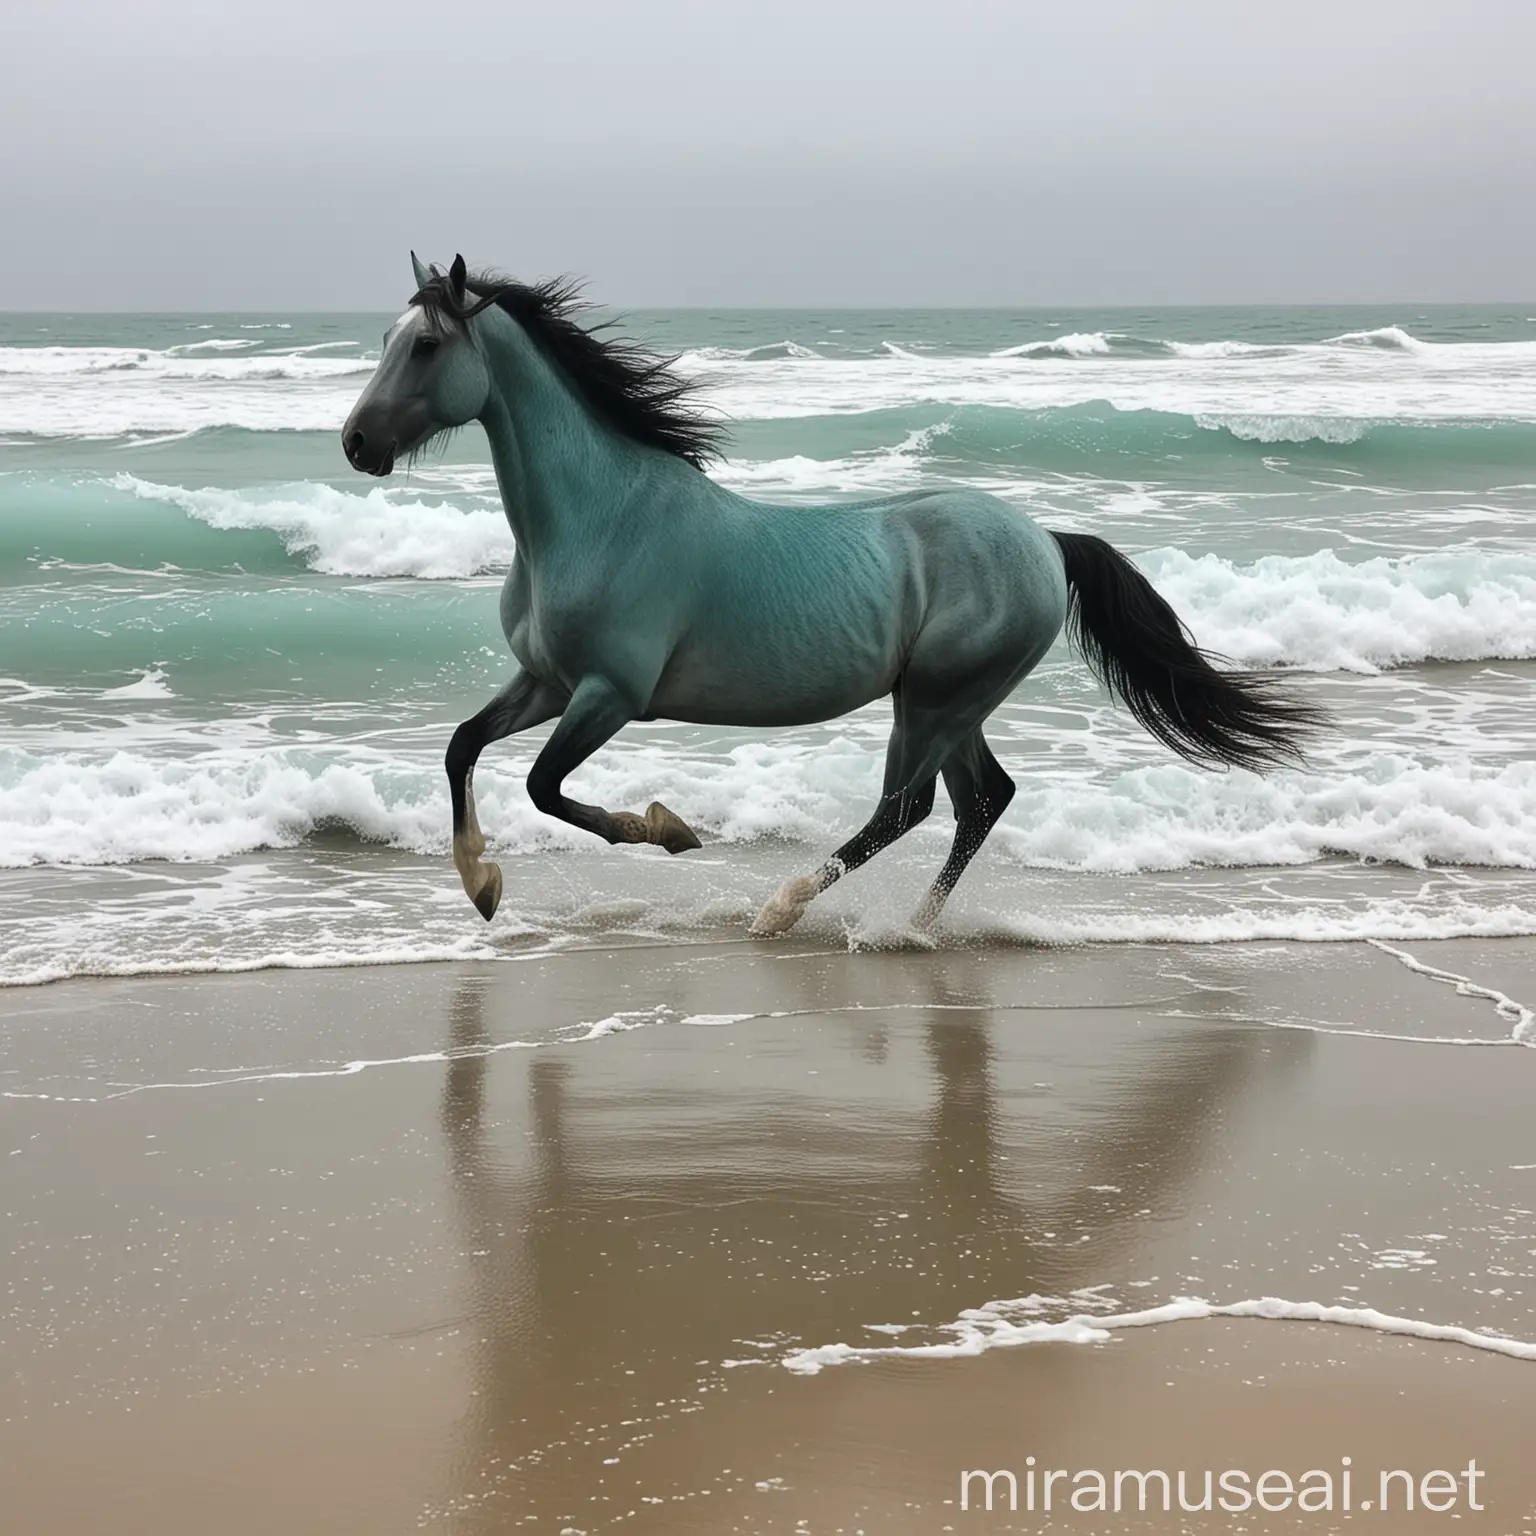 Galloping Horse on Serene Aquamarine Beach